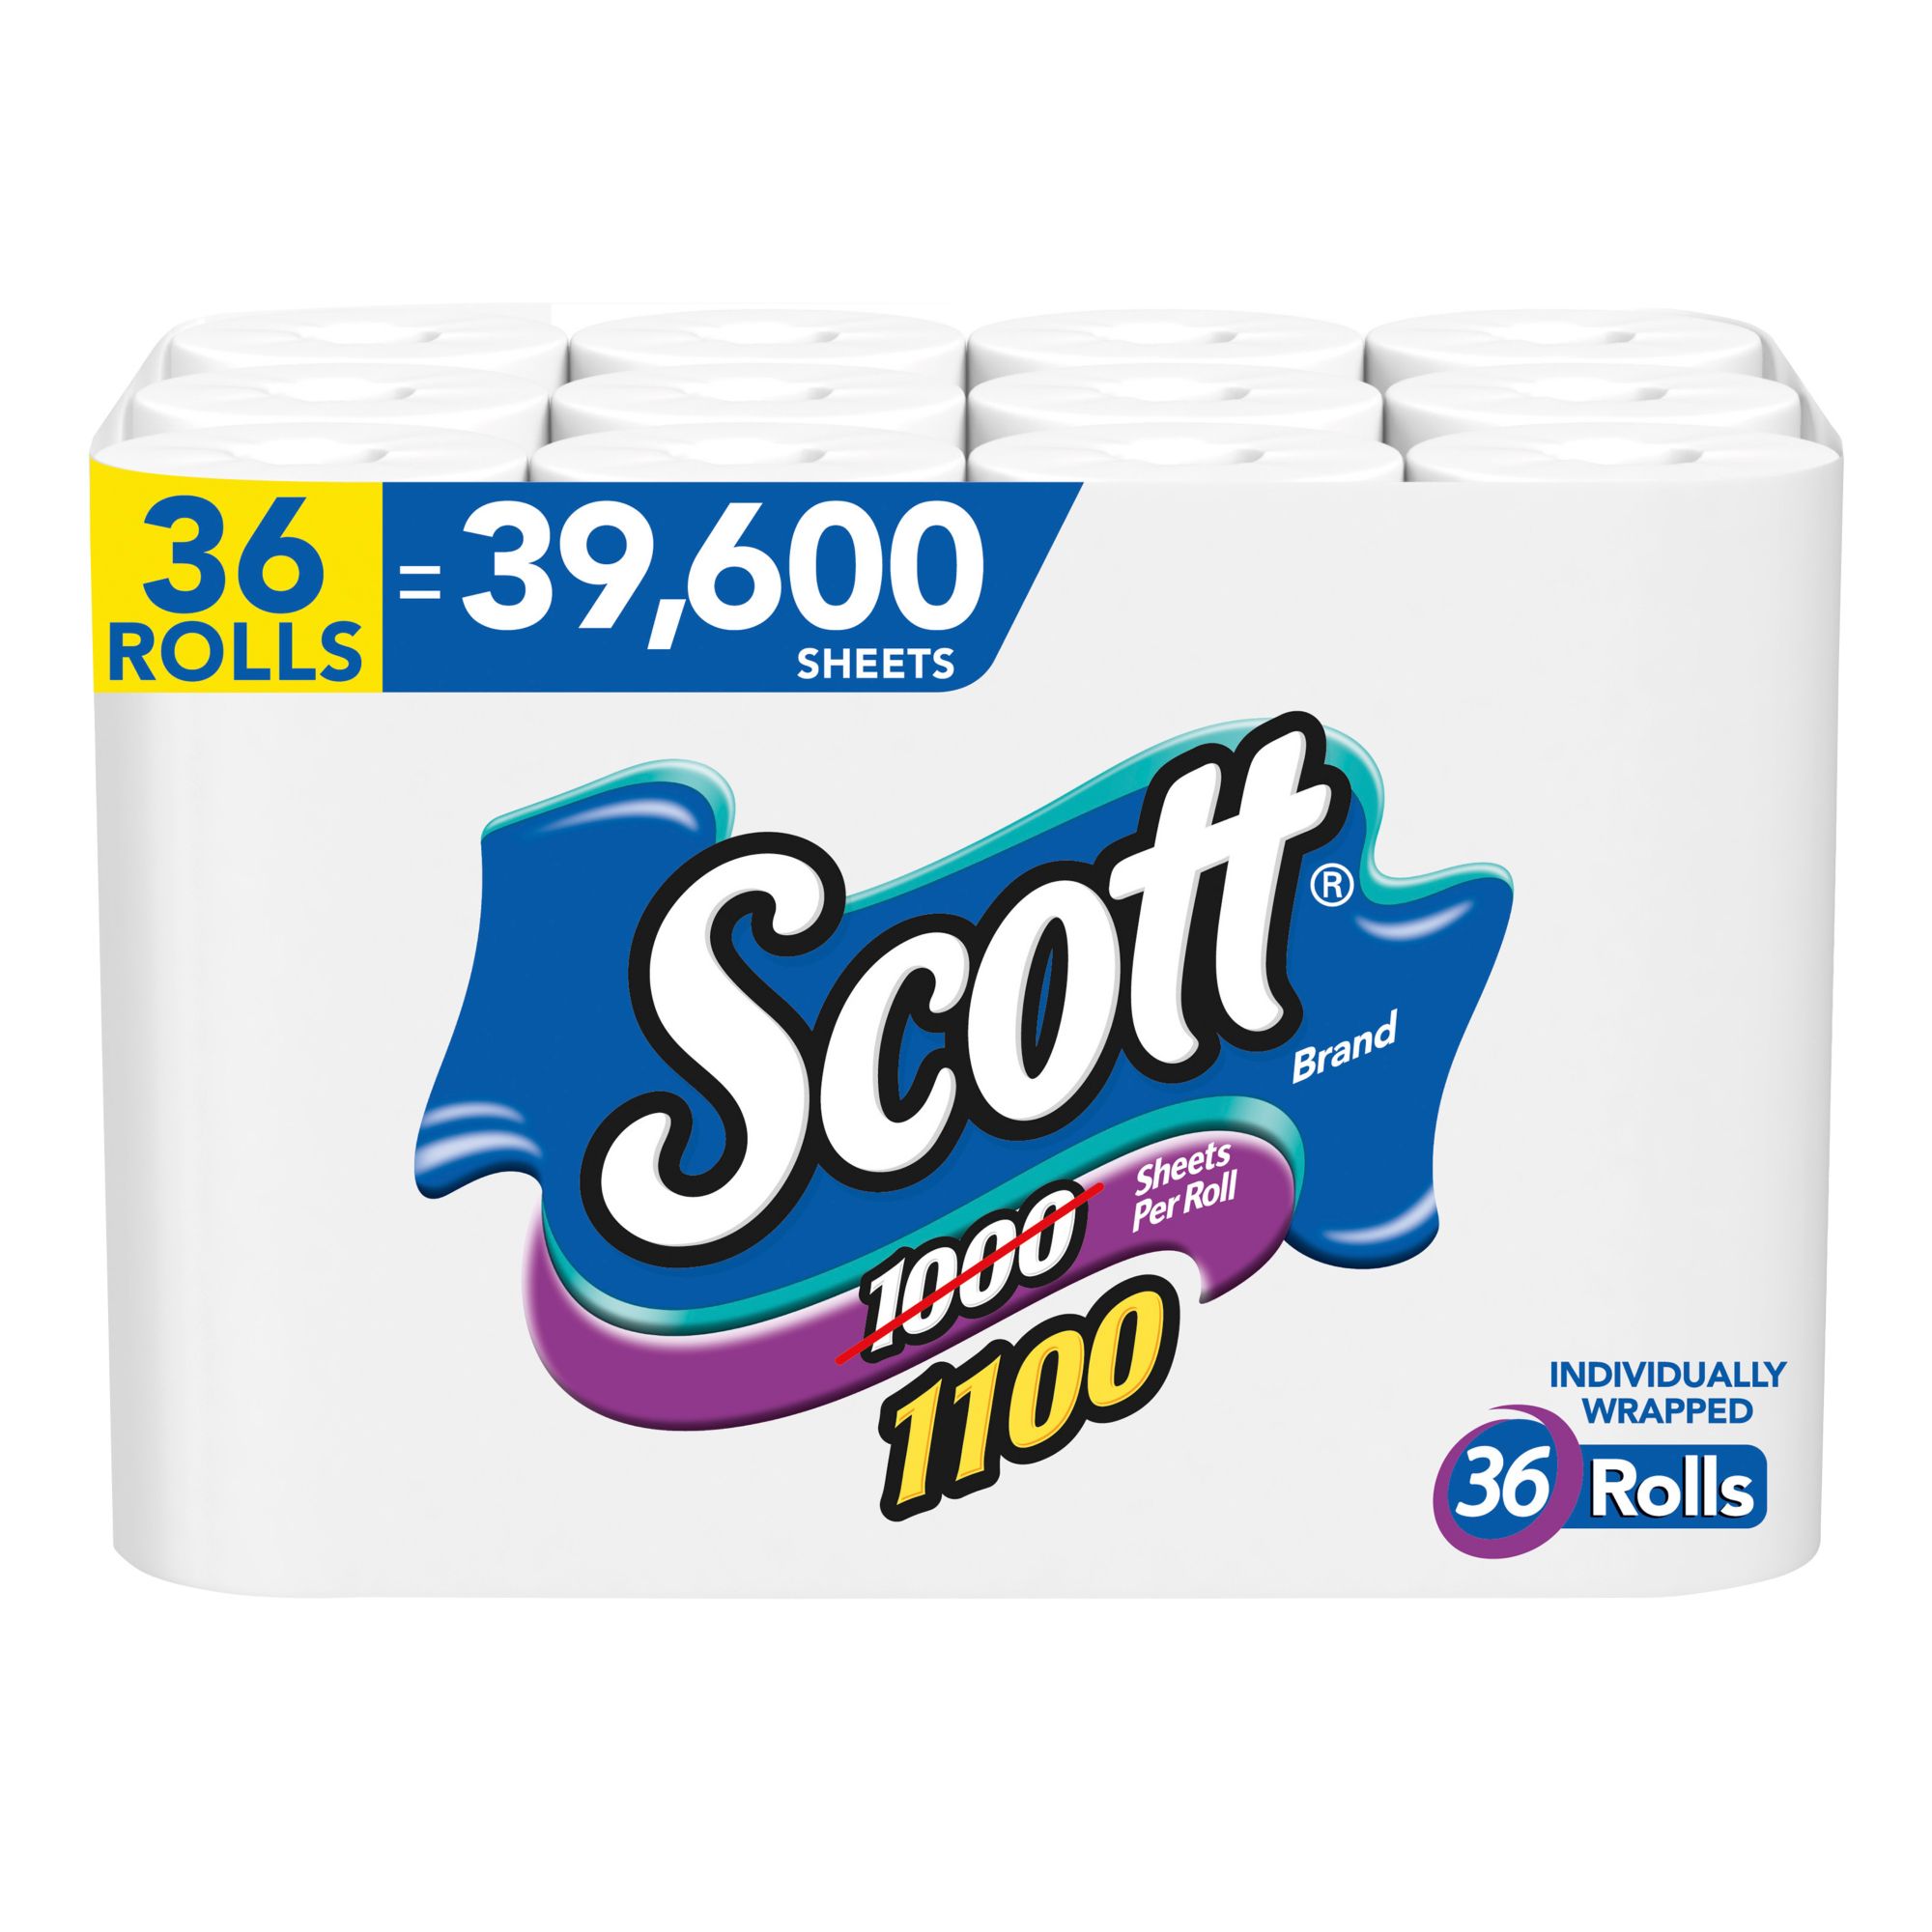 2 Ply Toilet Tissue. Pack of 24 Ct. Each Roll 400 Sheets, White Toilet  Paper w/Bonus 1 lb Box of Pasta